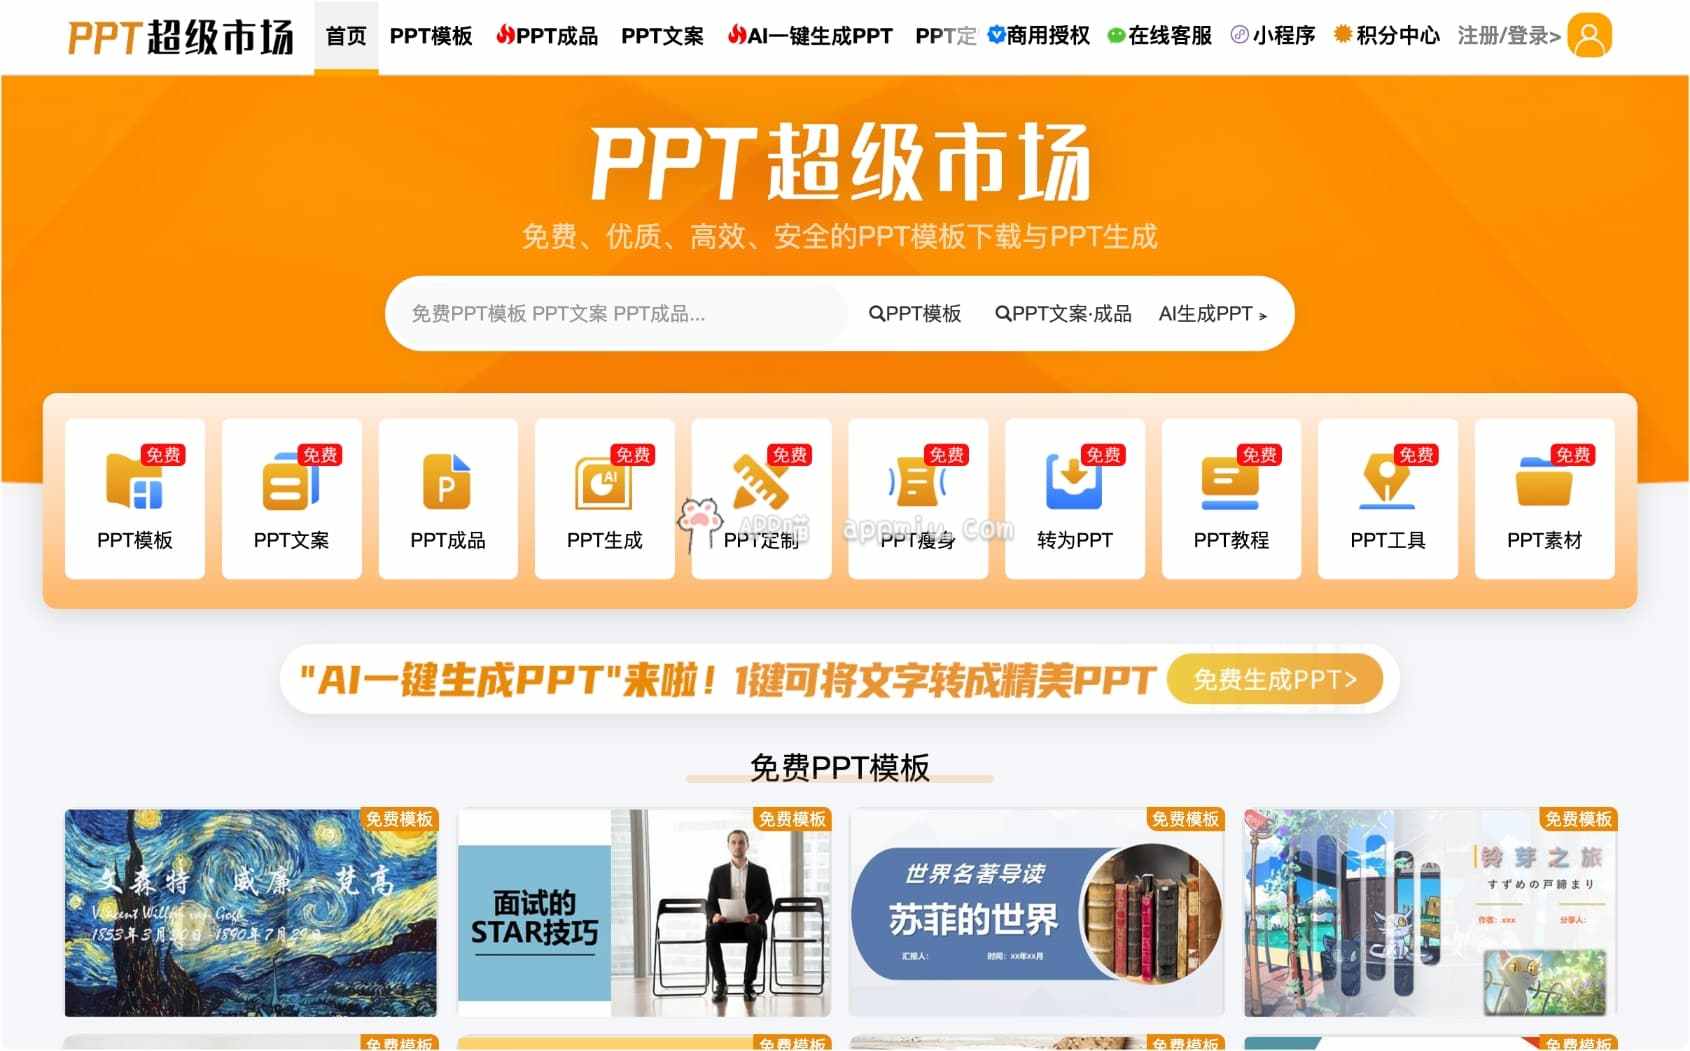 PPT超级市场，免费PPT模板下载与PPT定制，免费体验AI一键生成PPT-APP喵-阿喵软件